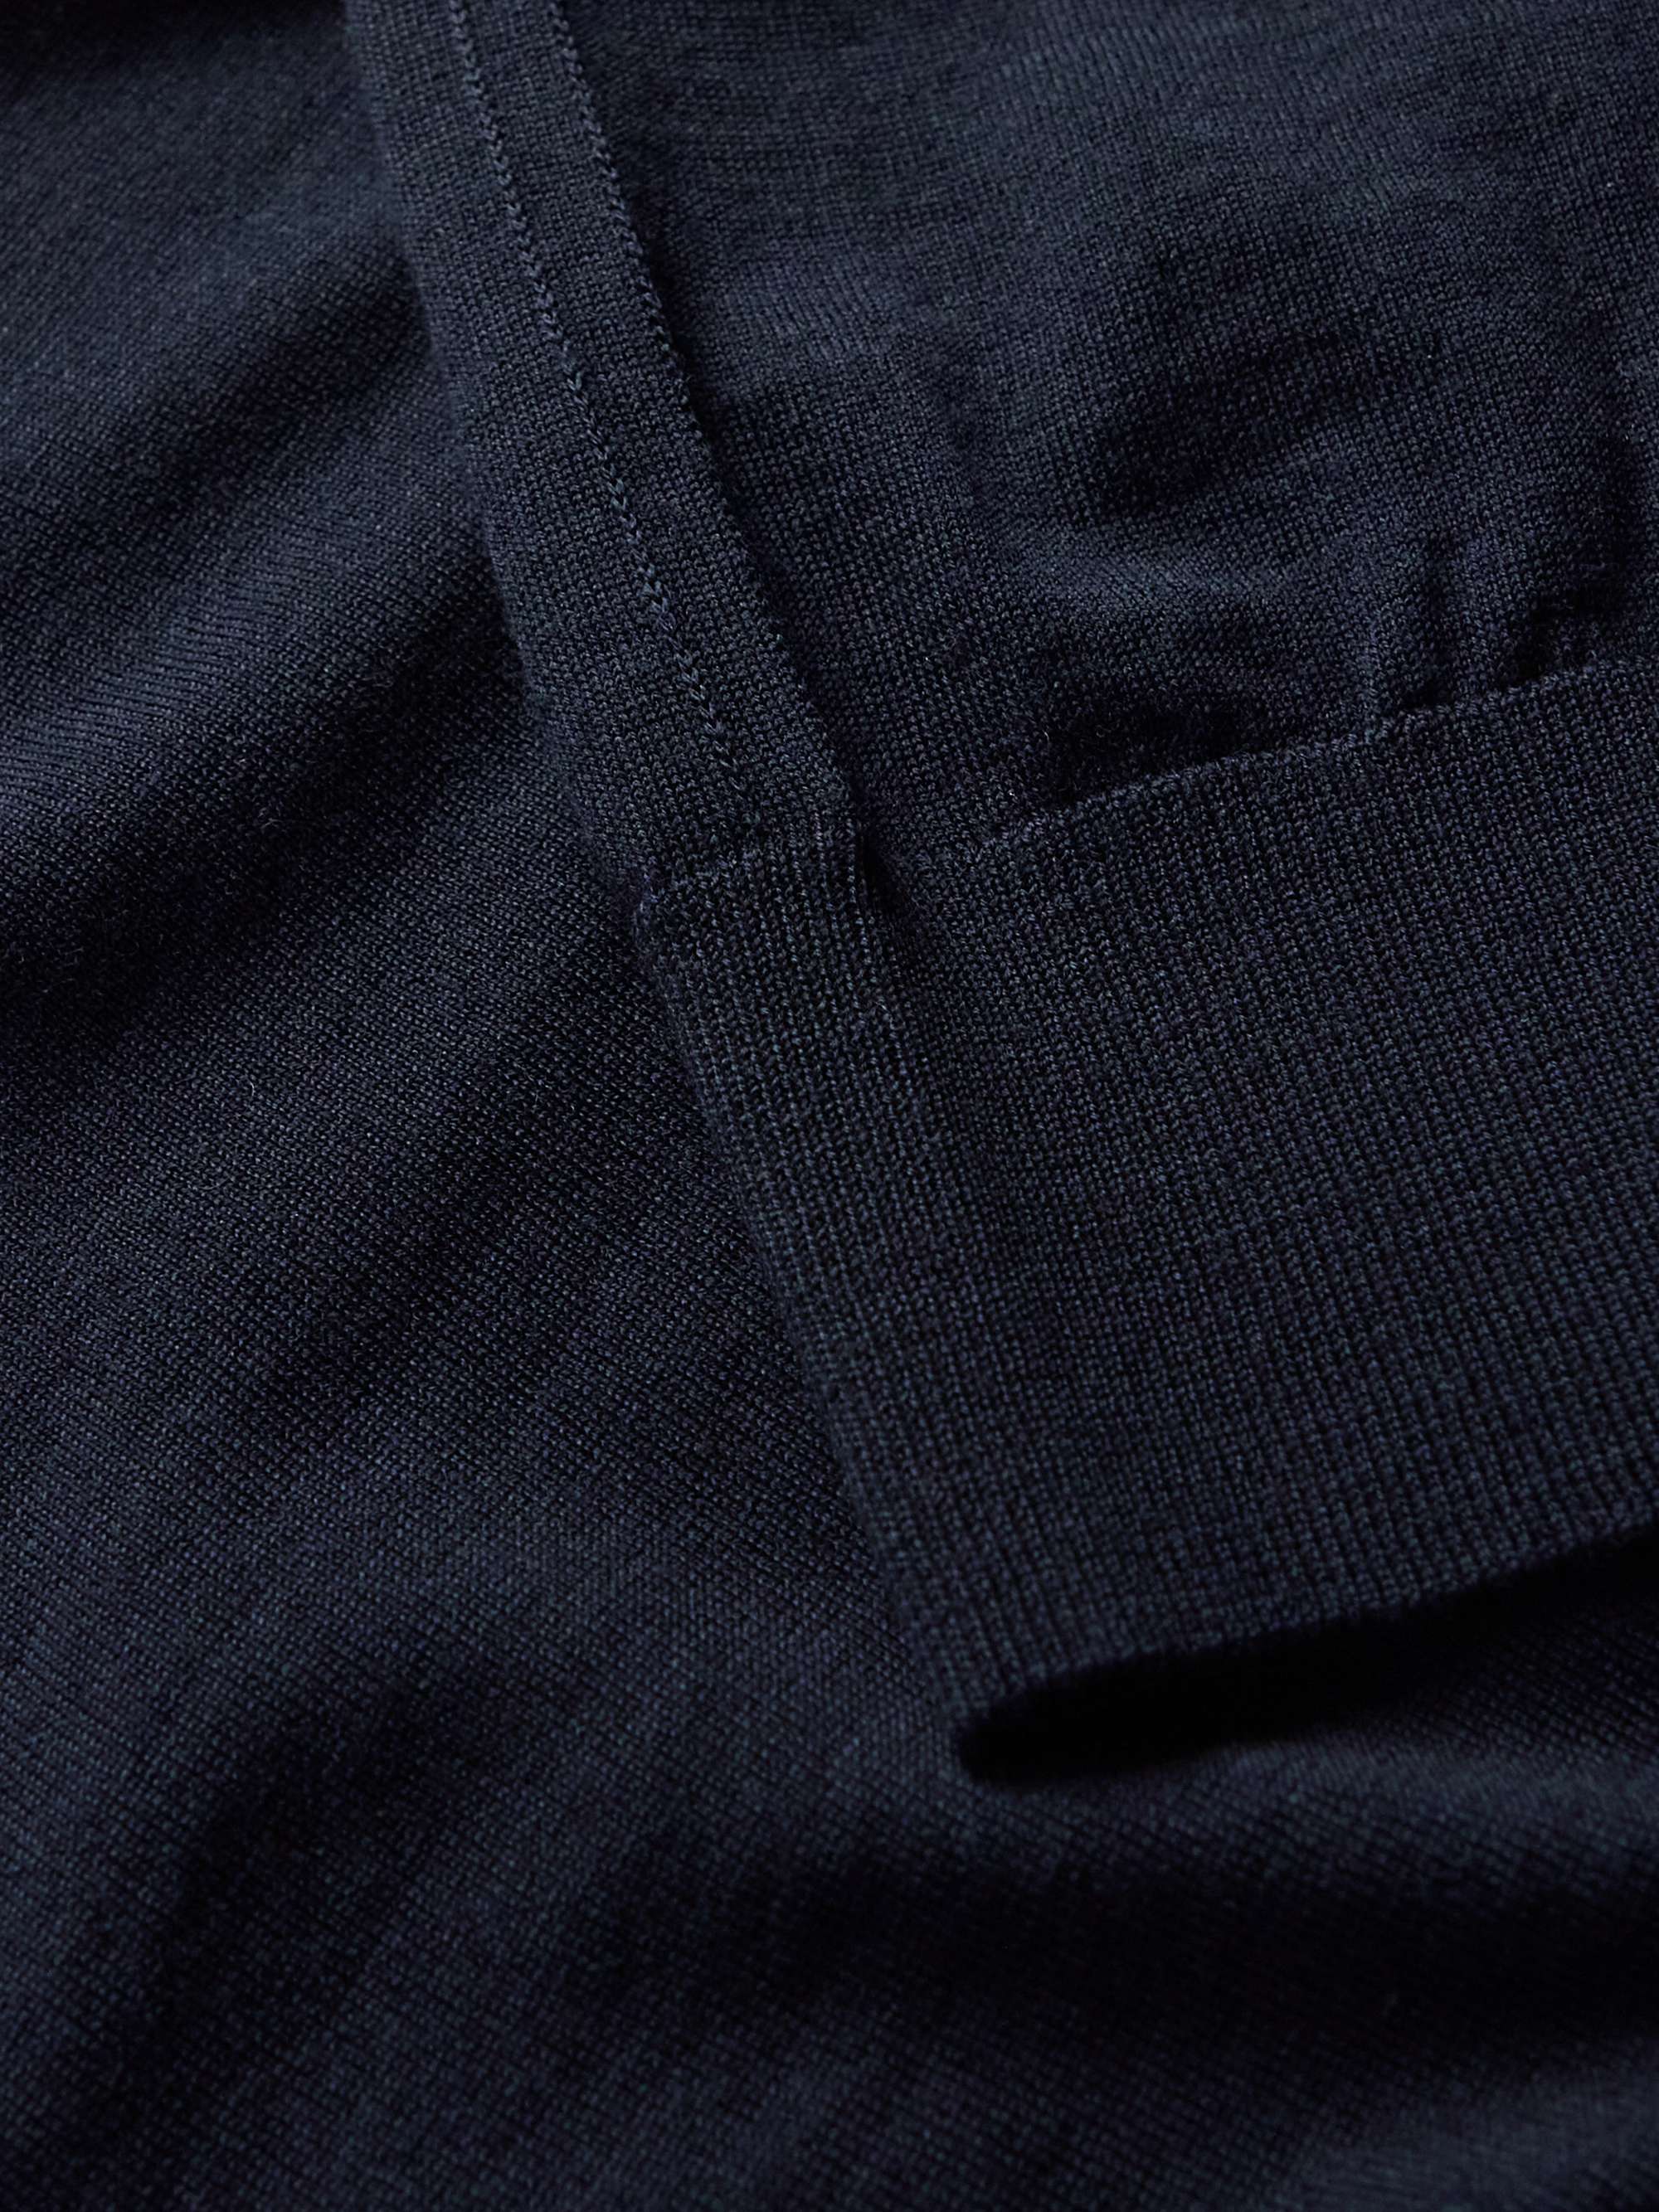 ZEGNA Wool-Jersey Sweatshirt